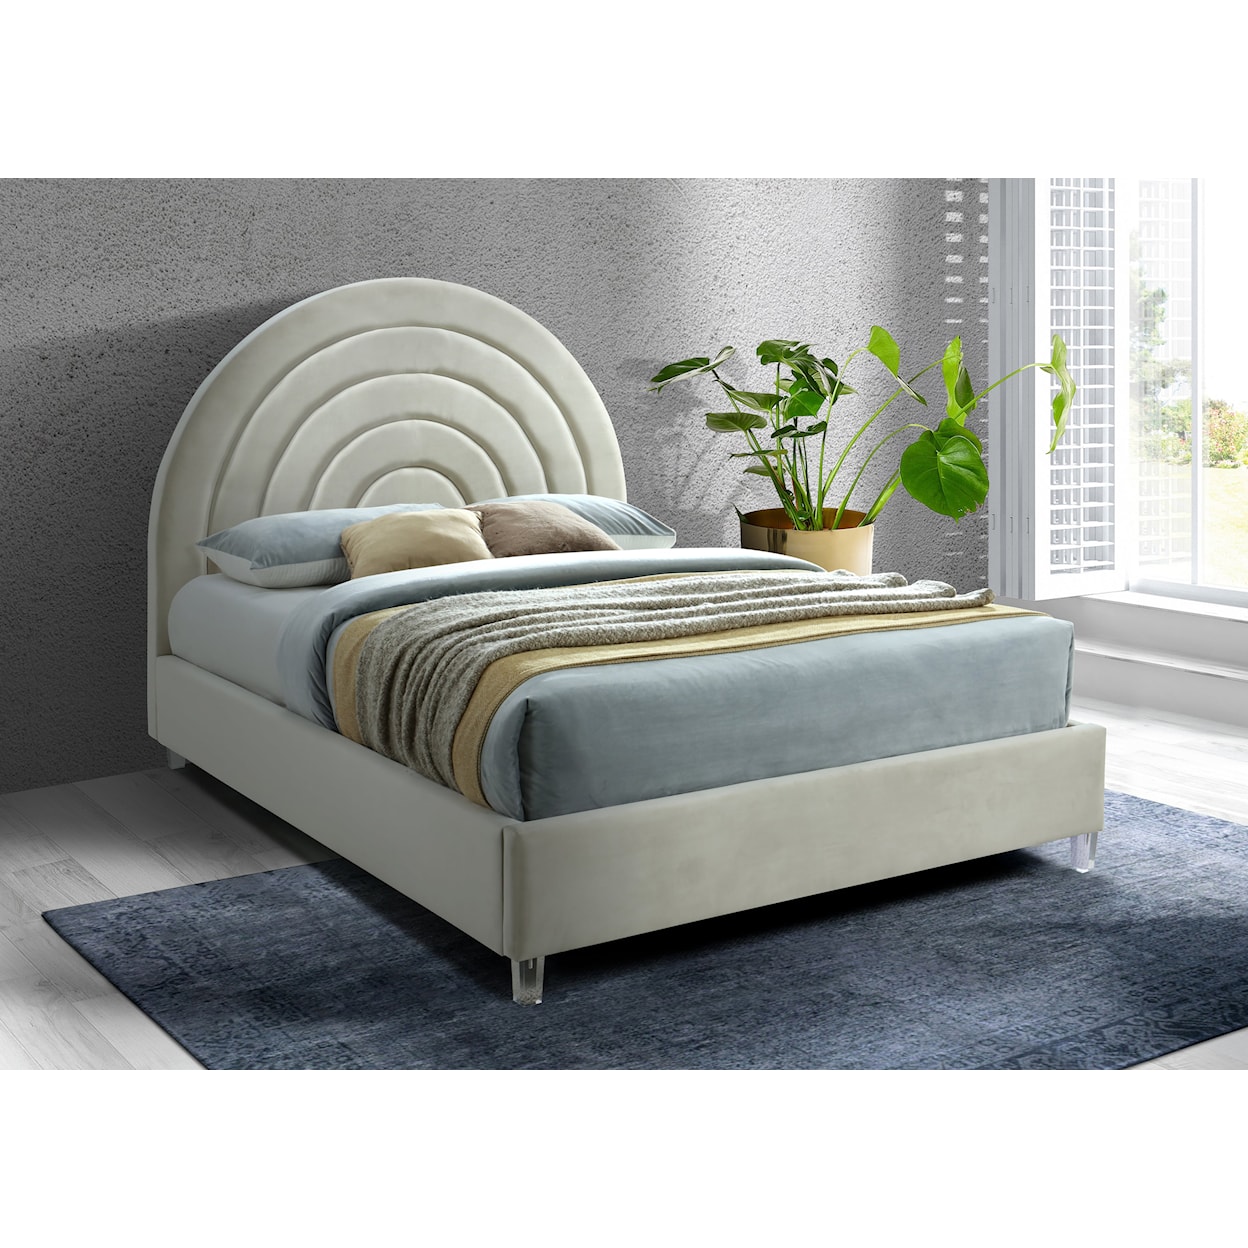 Meridian Furniture Rainbow Full Bed